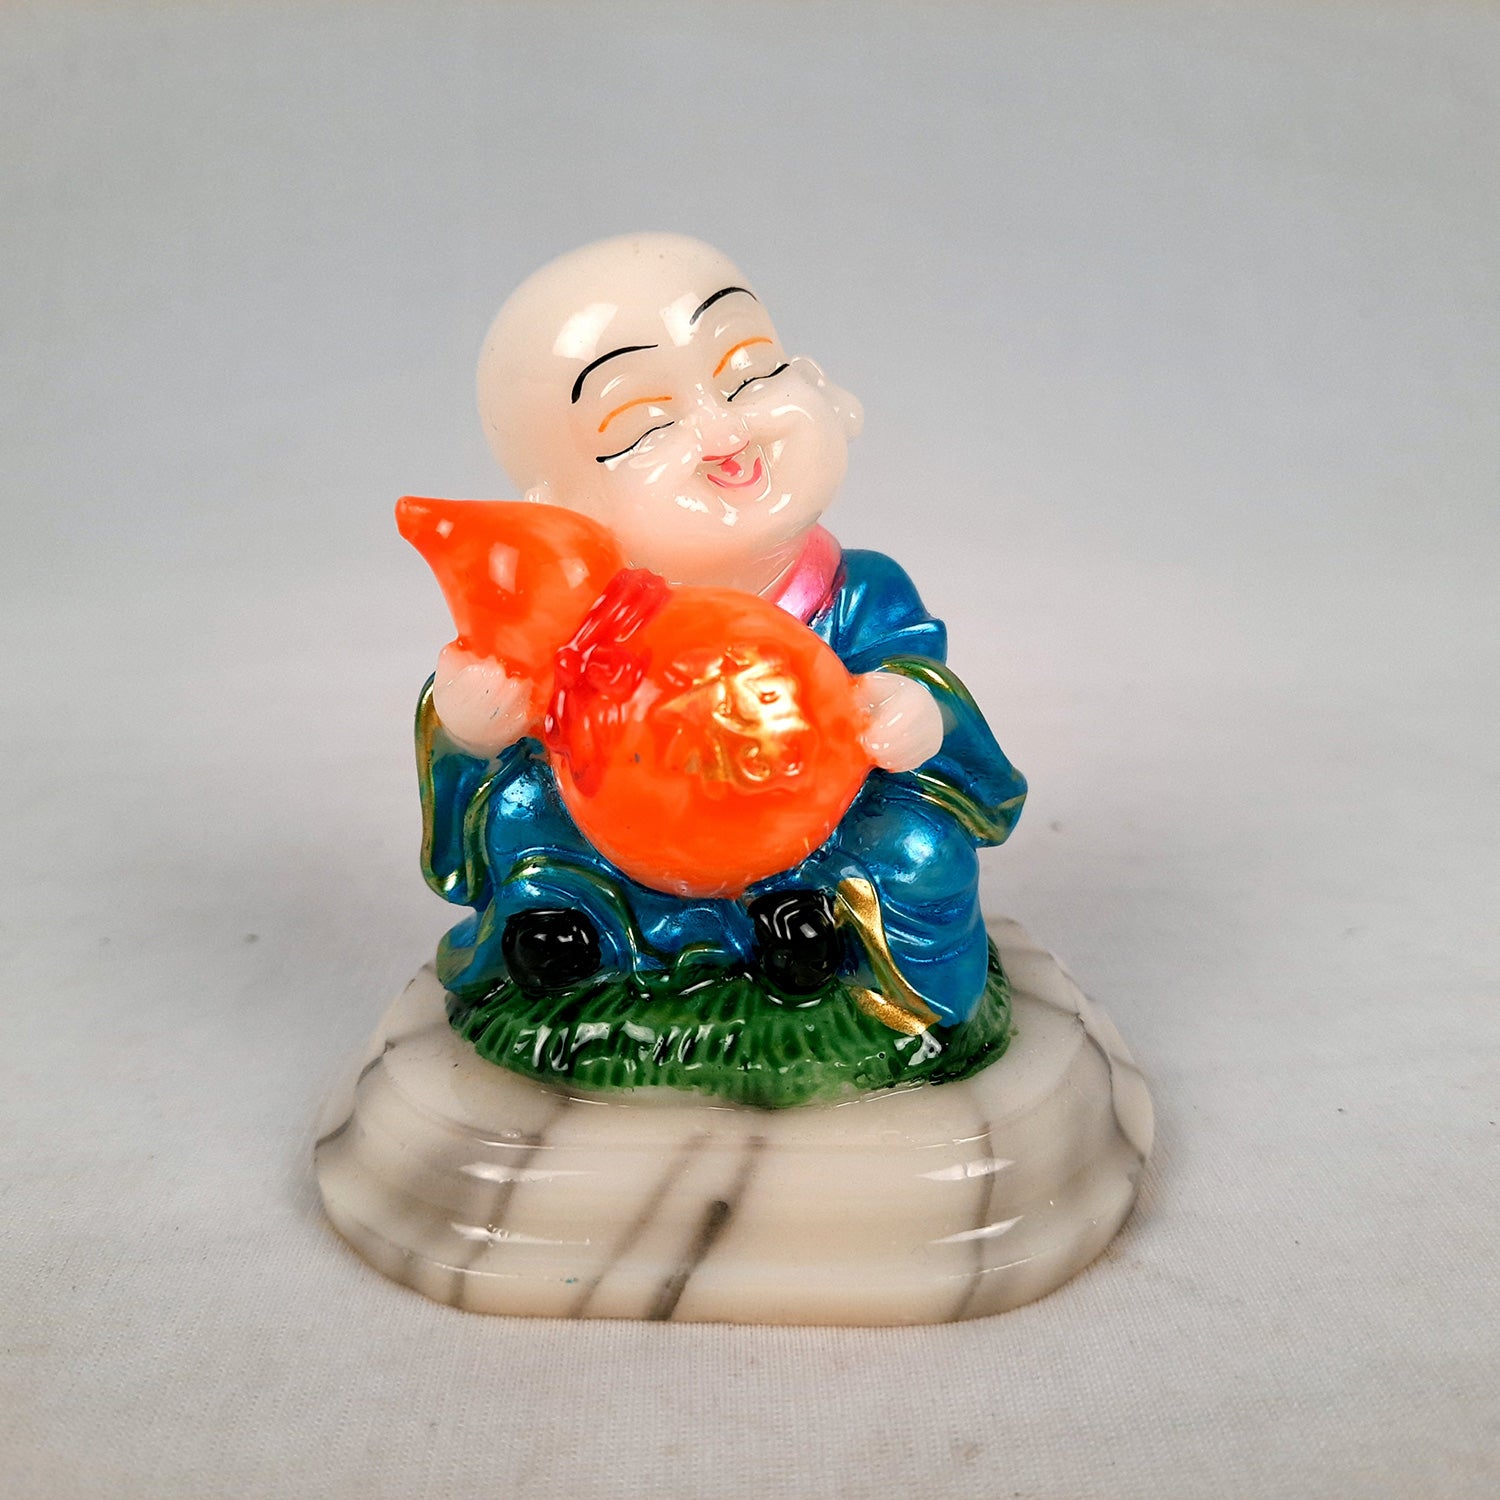 Buddha Baby Monk Showpiece | Feng Shui Decor - For Good Luck, Home, Table, Office Decor, Car Dashboard & Gift - 4 Inch (Set of 3) - Apkamart